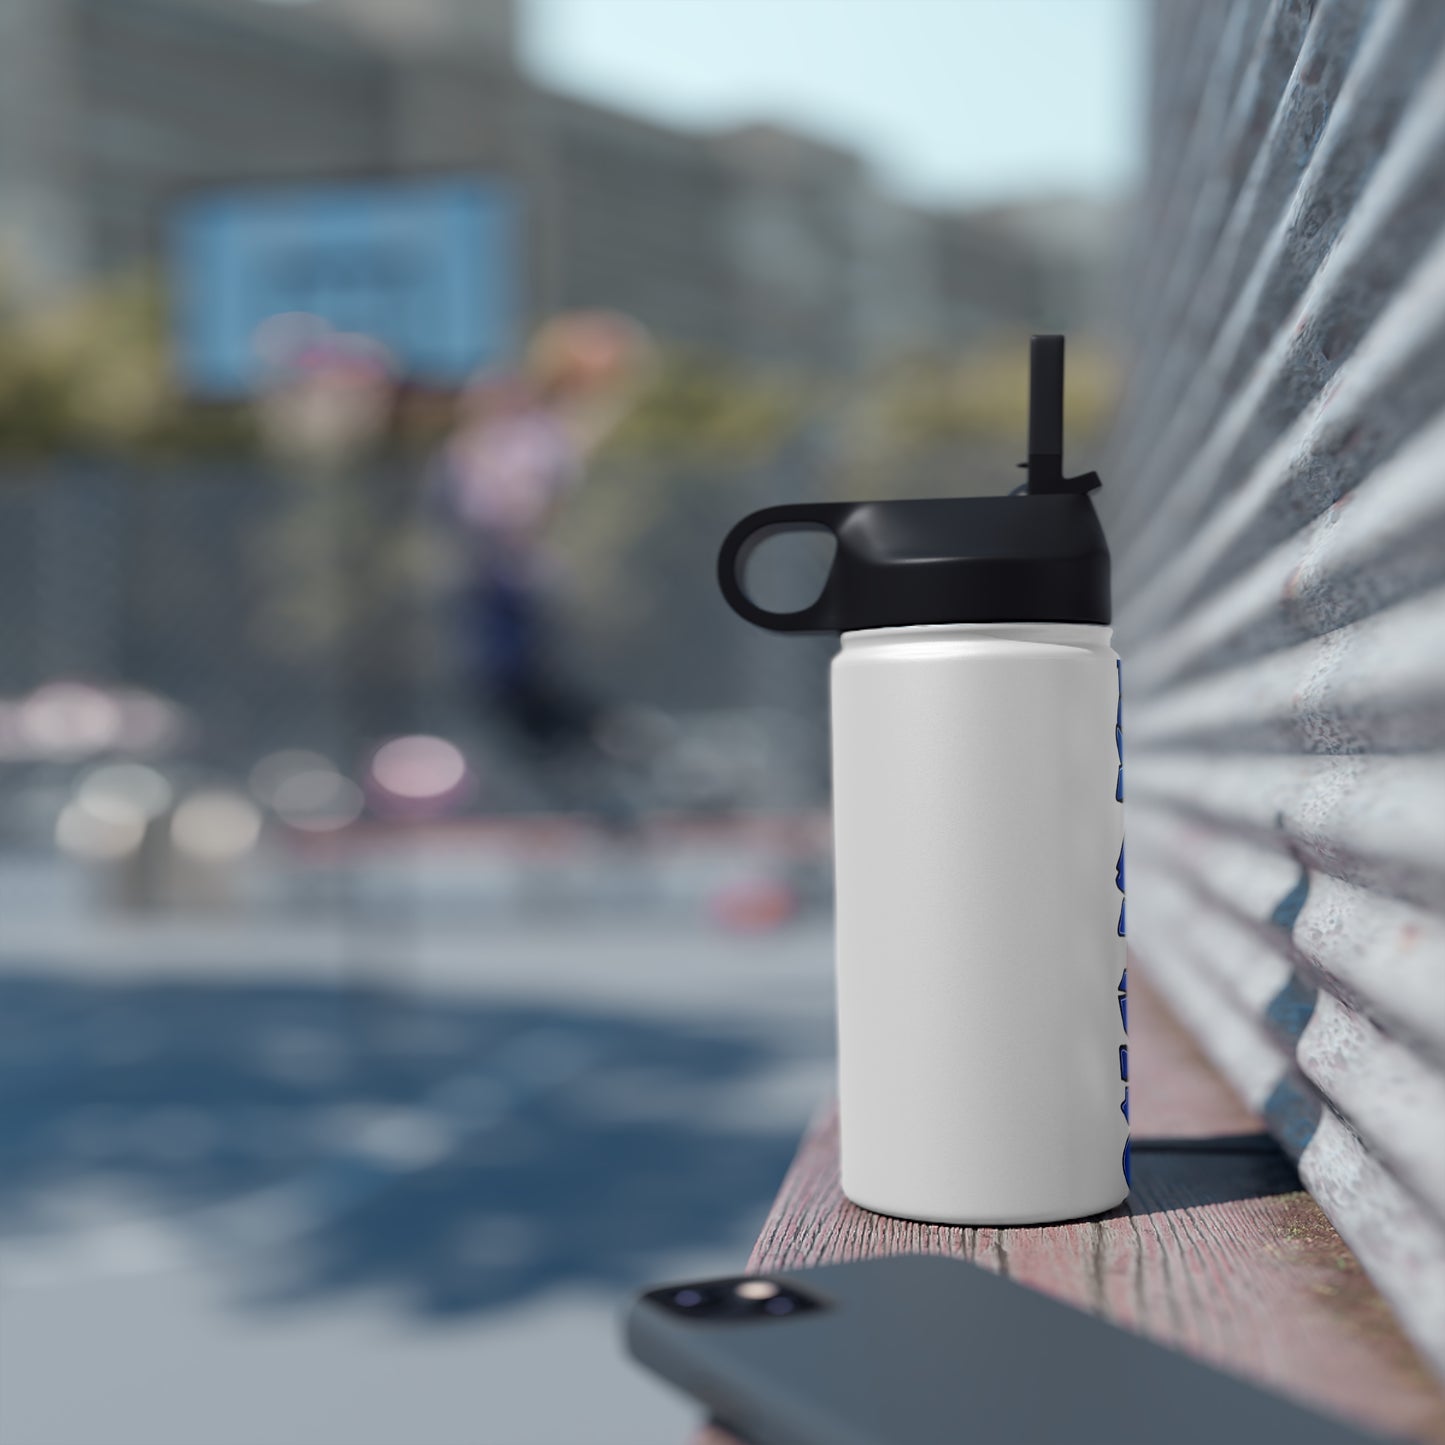 Graffiti Stainless Steel Water Bottle